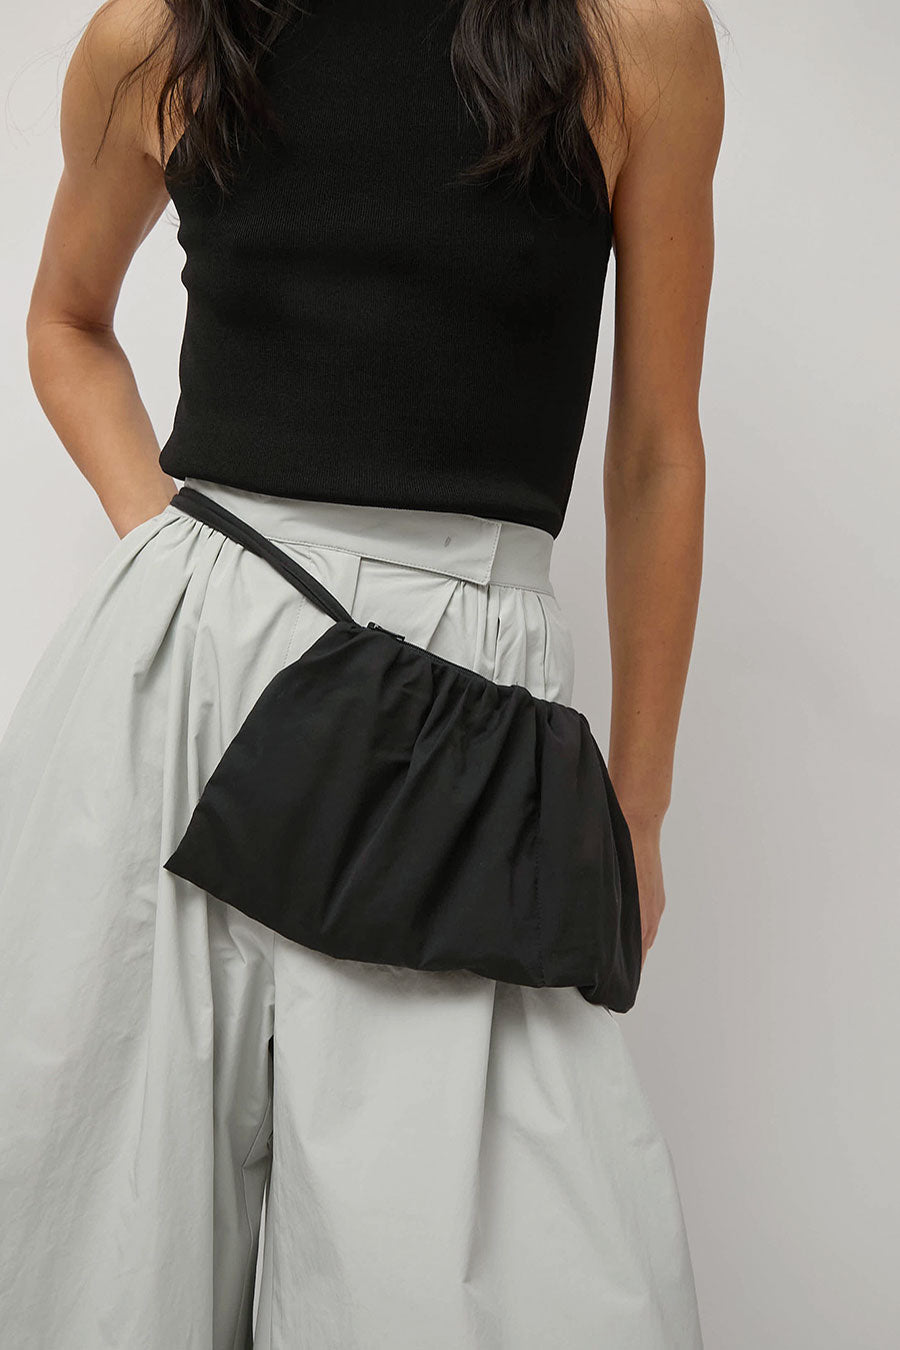 Amomento Shirring Bag in Black